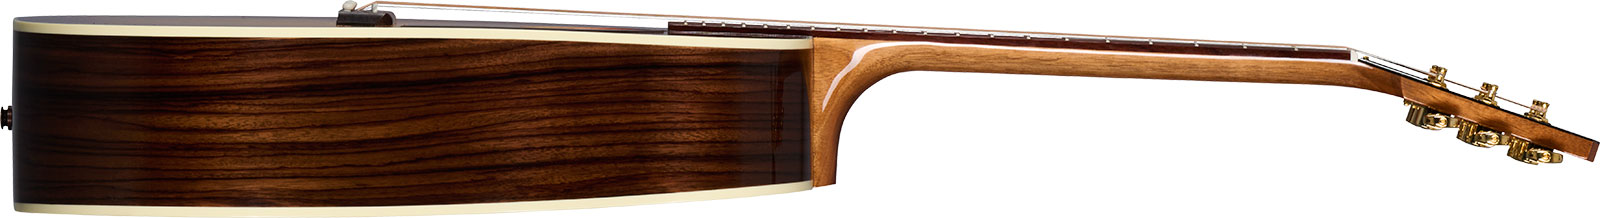 Gibson J-45 Standard Rosewood Dreadnought Epicea Acajou Rw - Rosewood Burst - Elektroakustische Gitarre - Variation 2